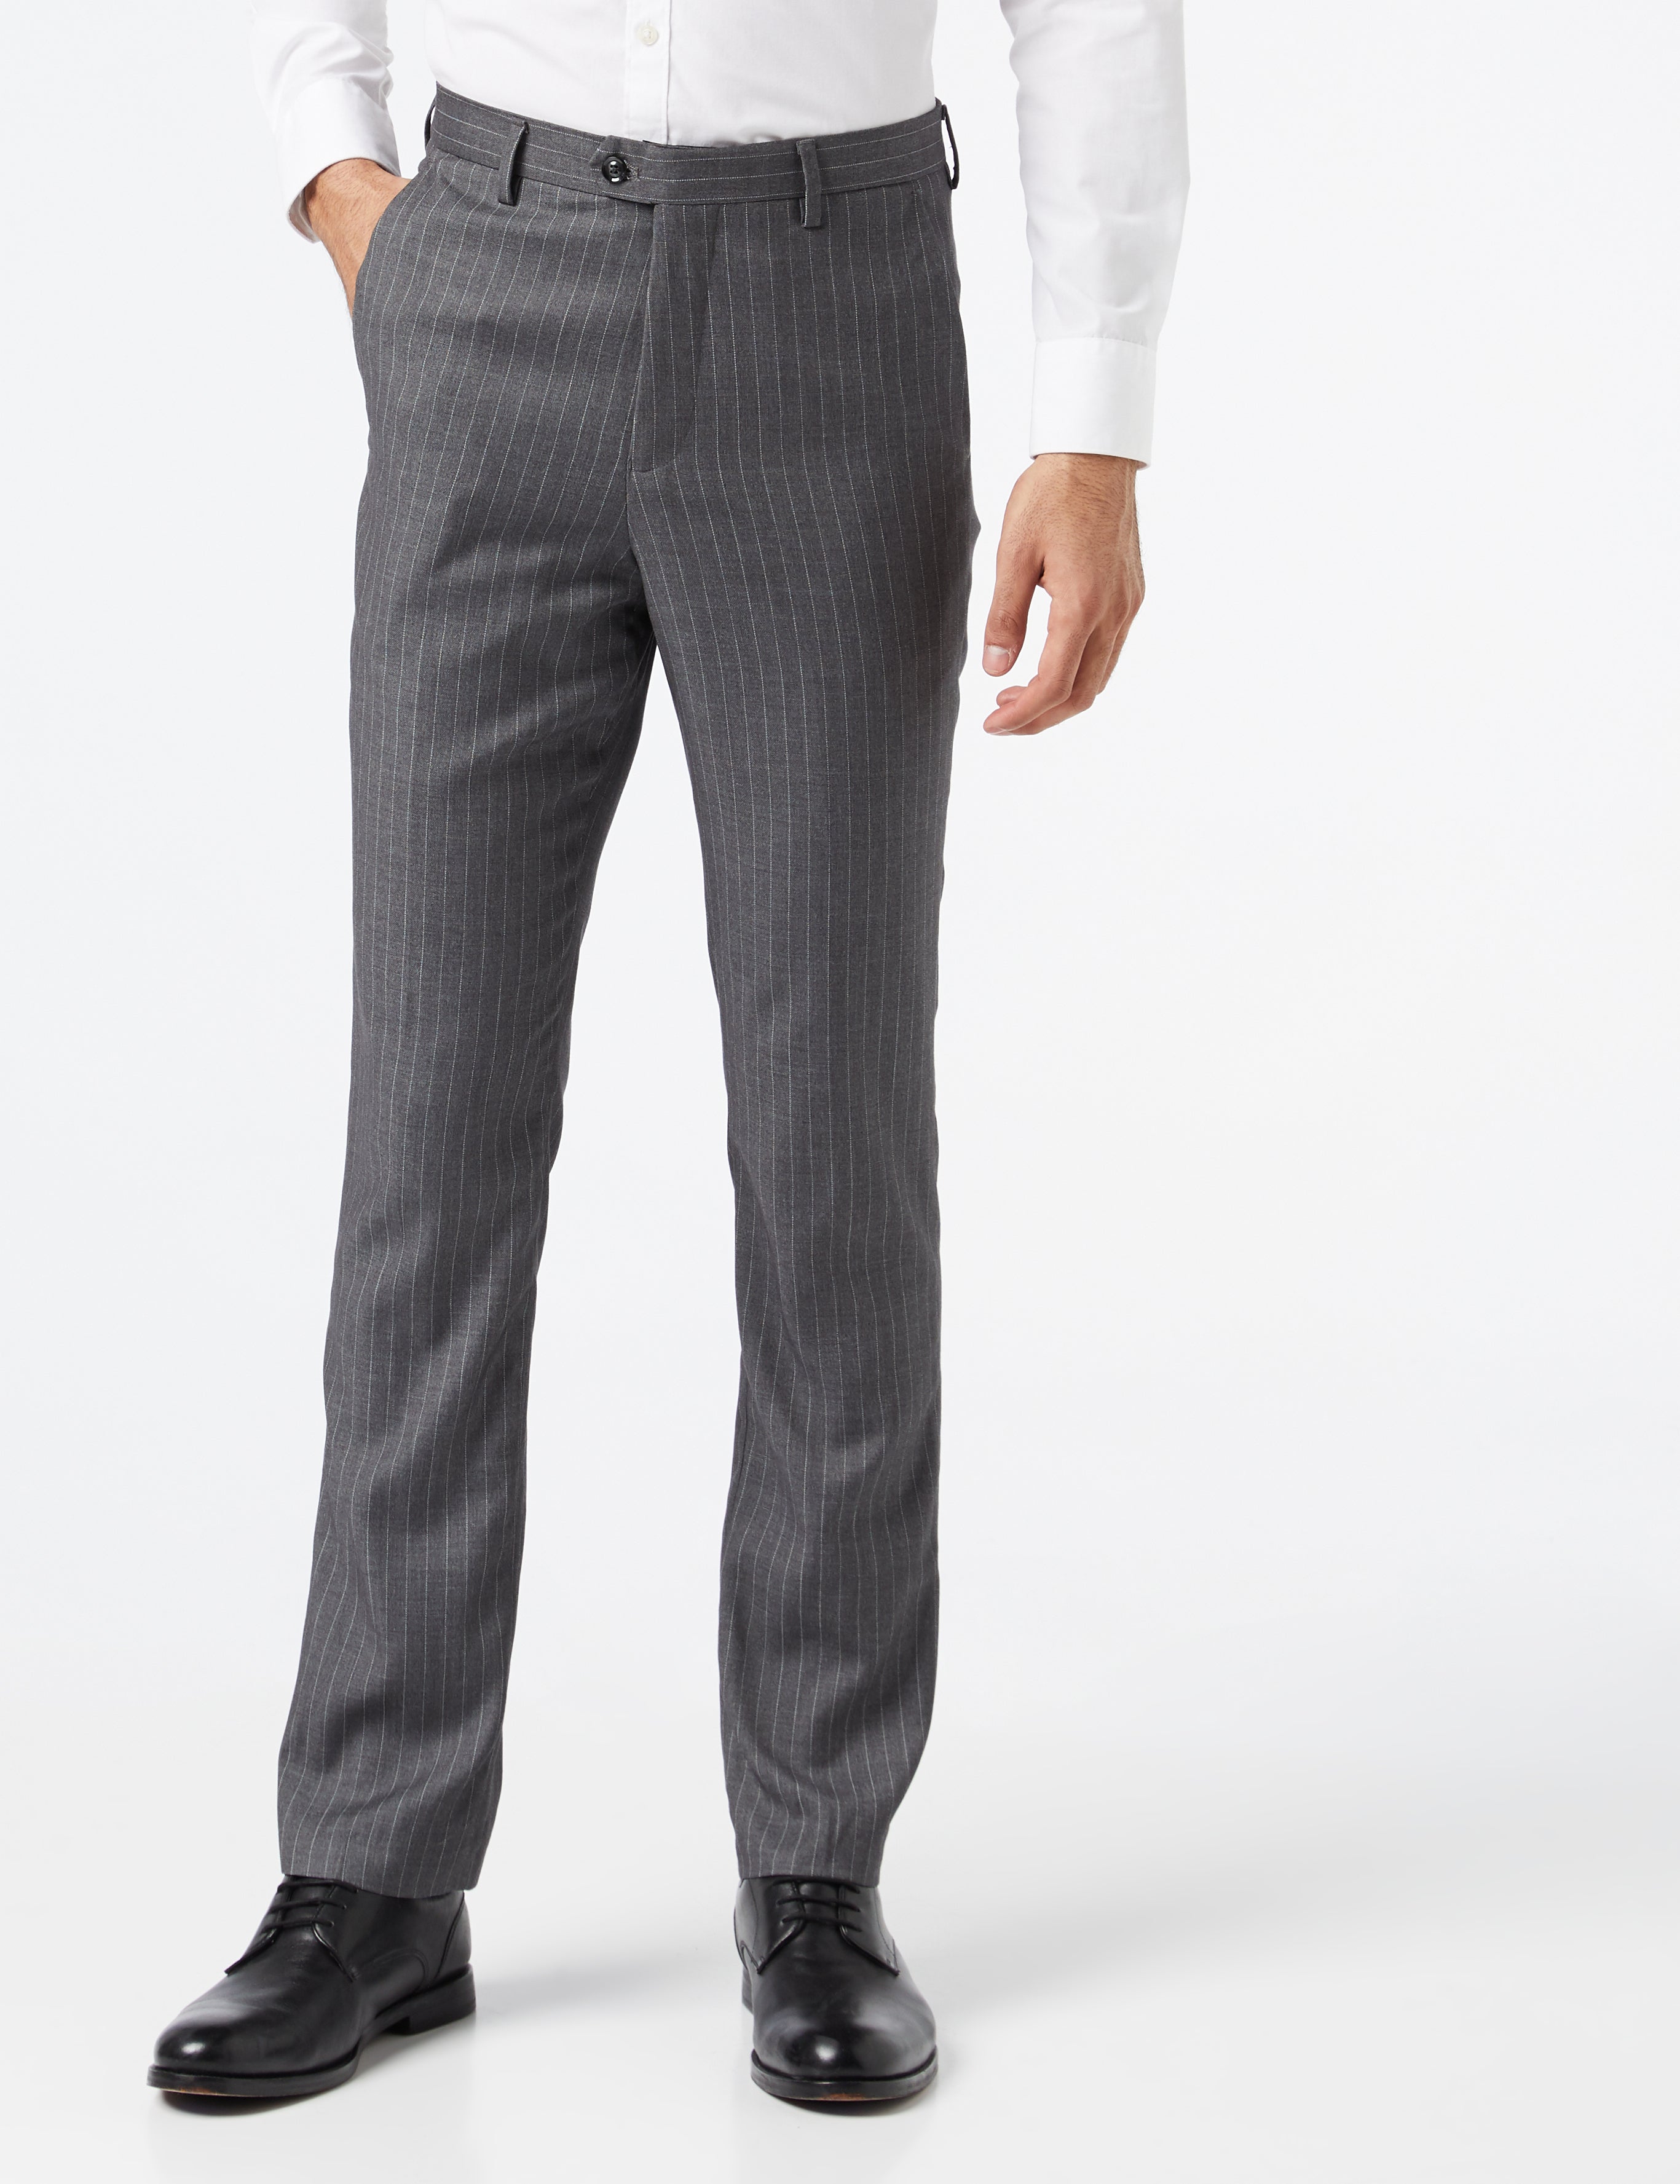 8 Piece Pin Stripe Grey Suit